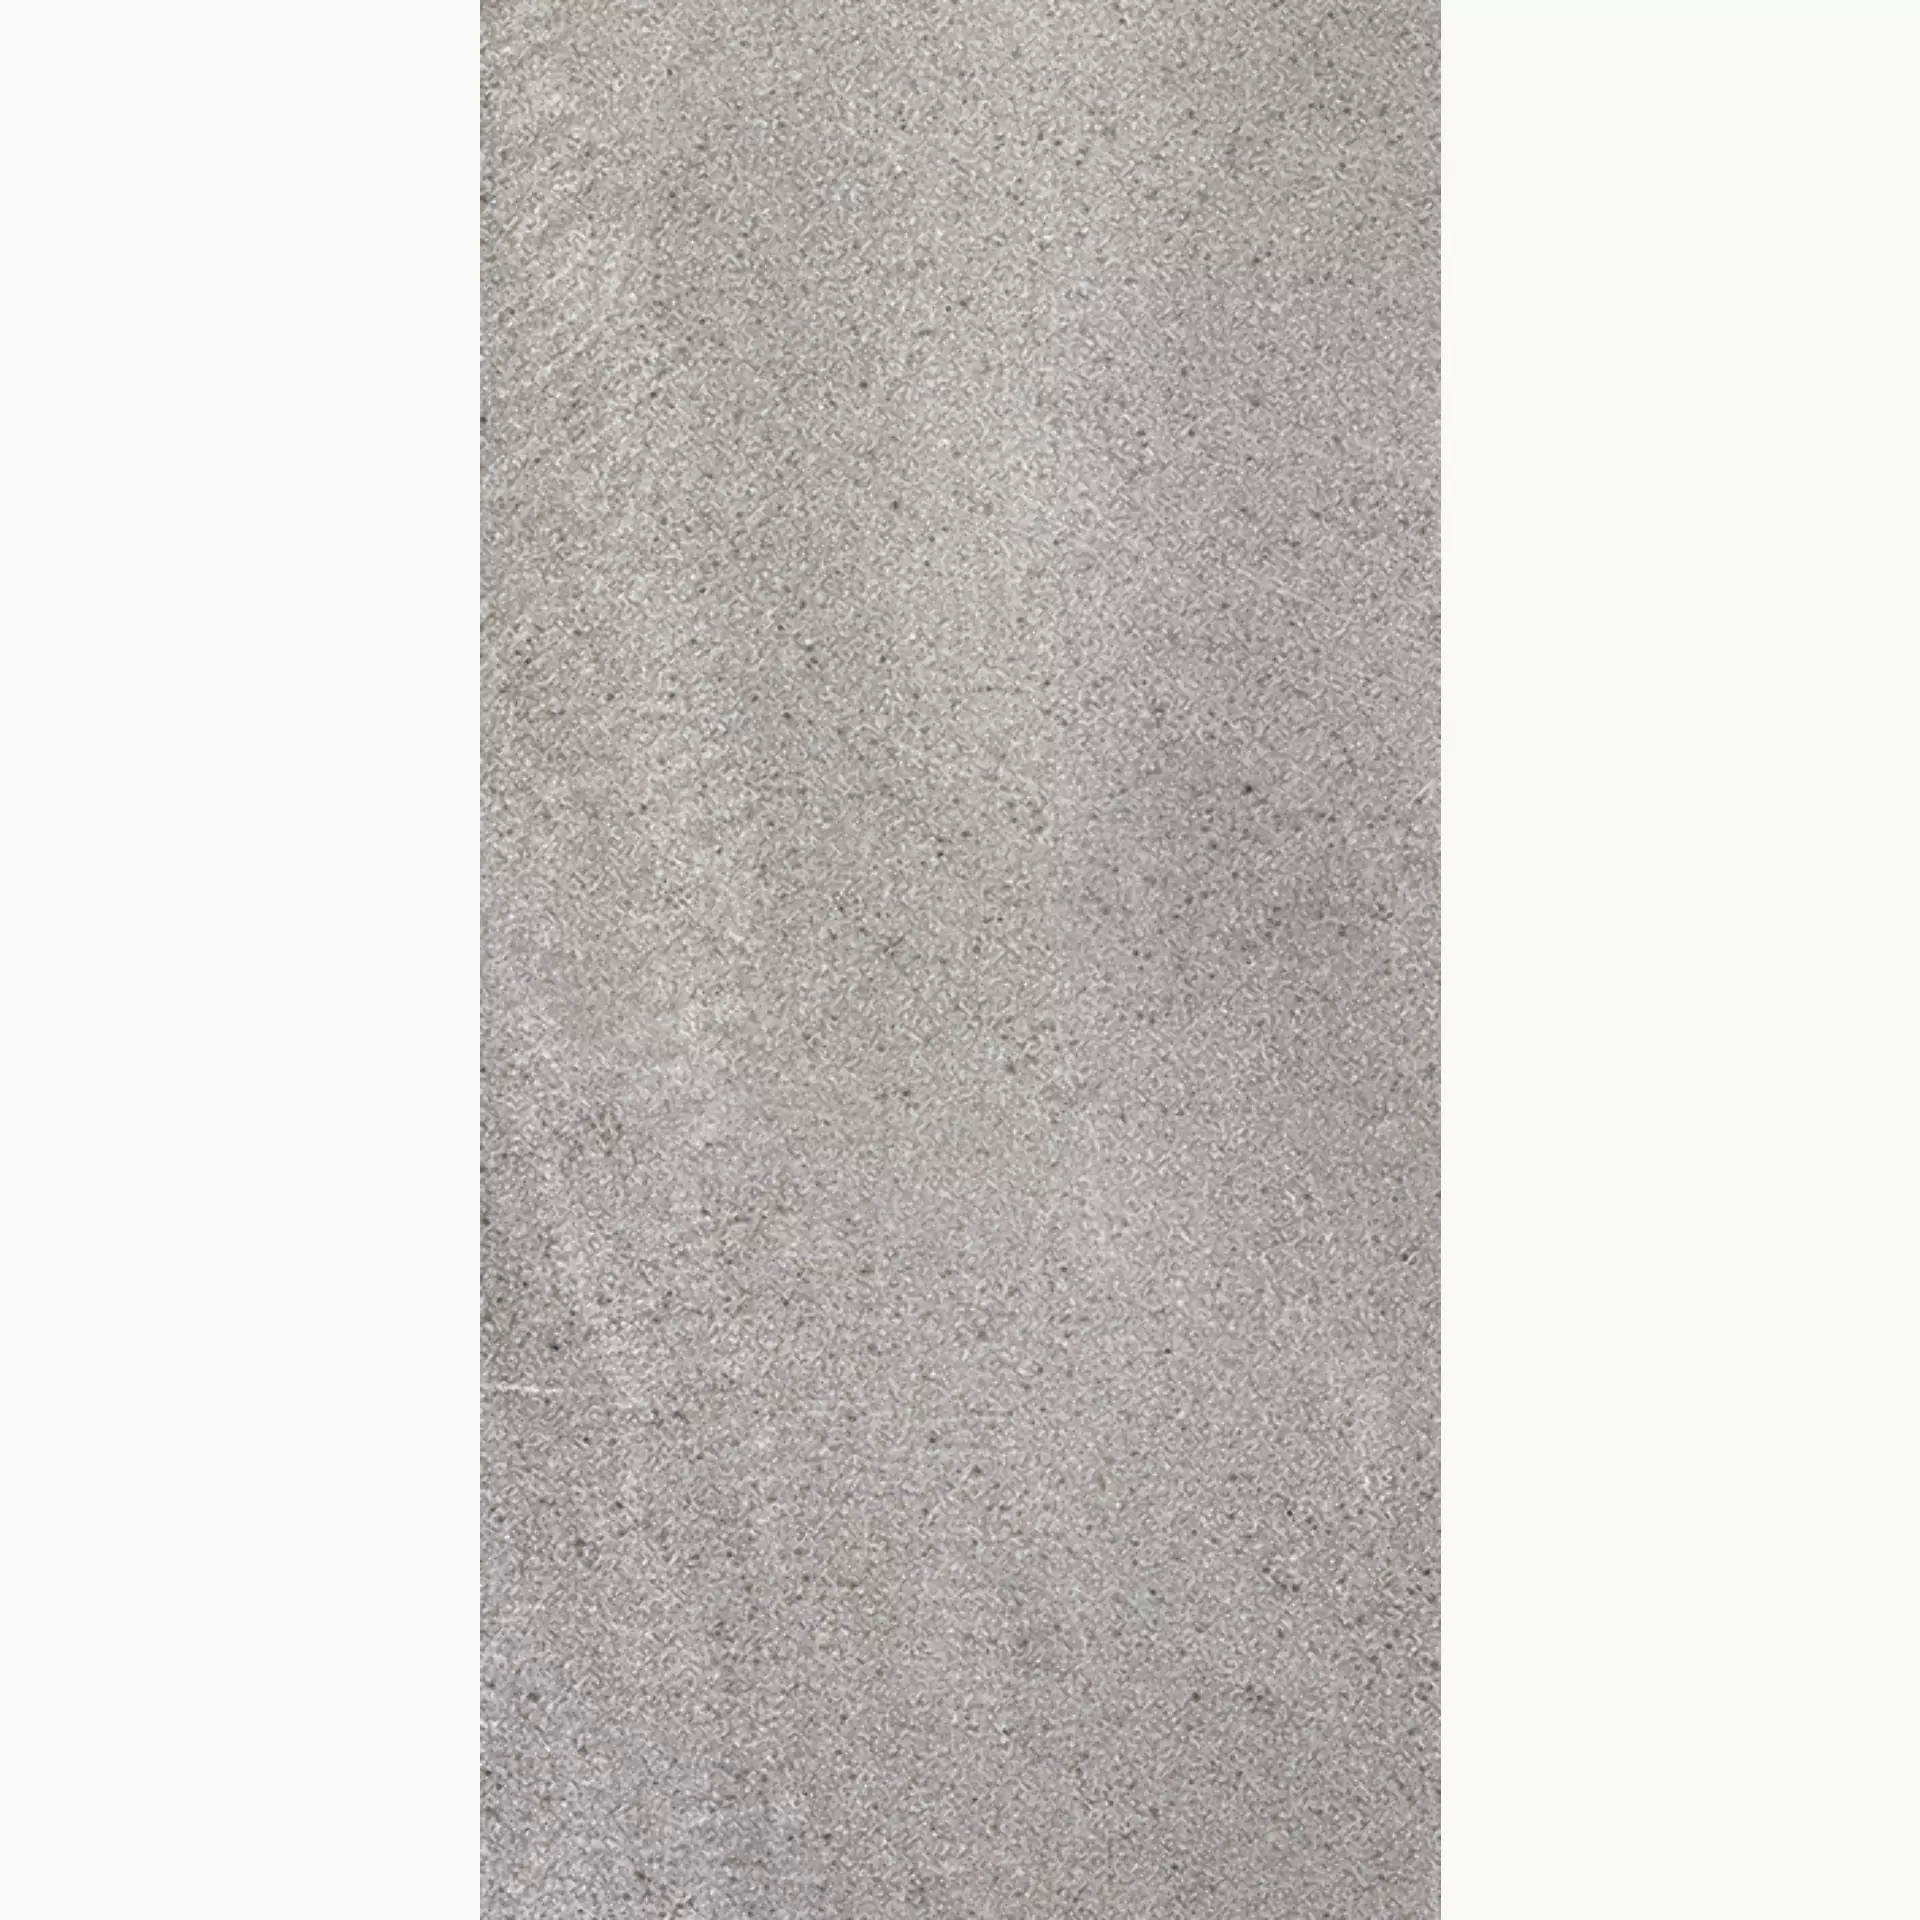 Villeroy & Boch Natural Blend Stone Grey Matt 2680-LY60 30x60cm rectified 10mm